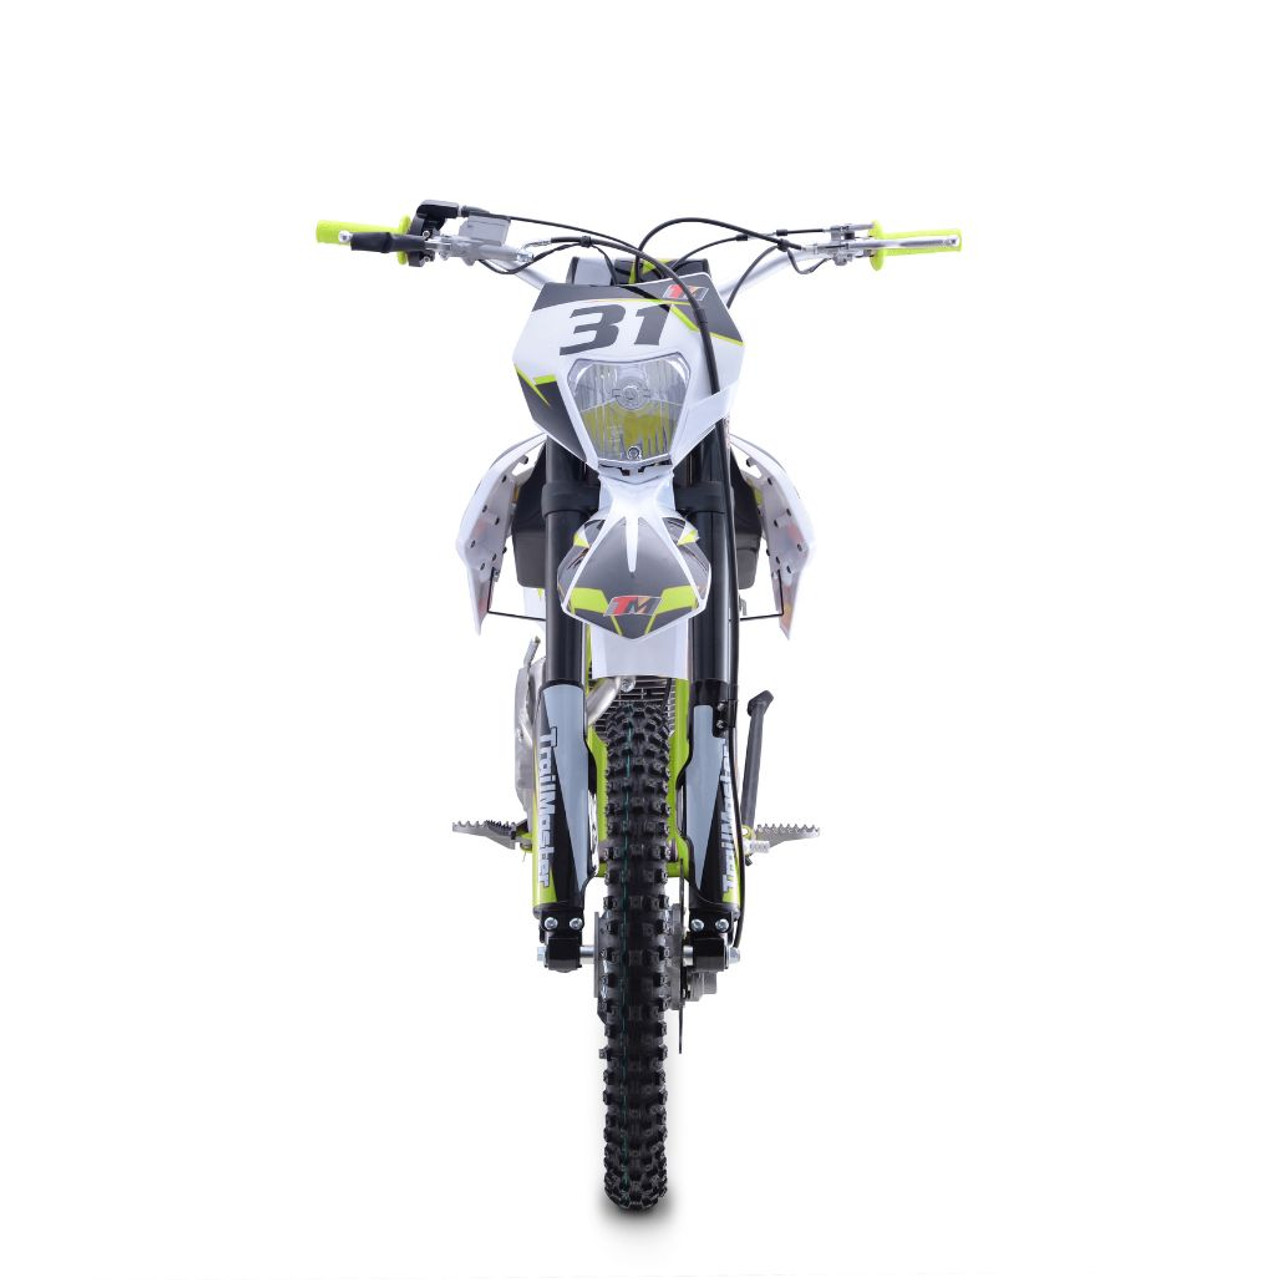 TrailMaster 250cc Dirt Bike, Manual Clutch, Electric Start (TM31-250) Green